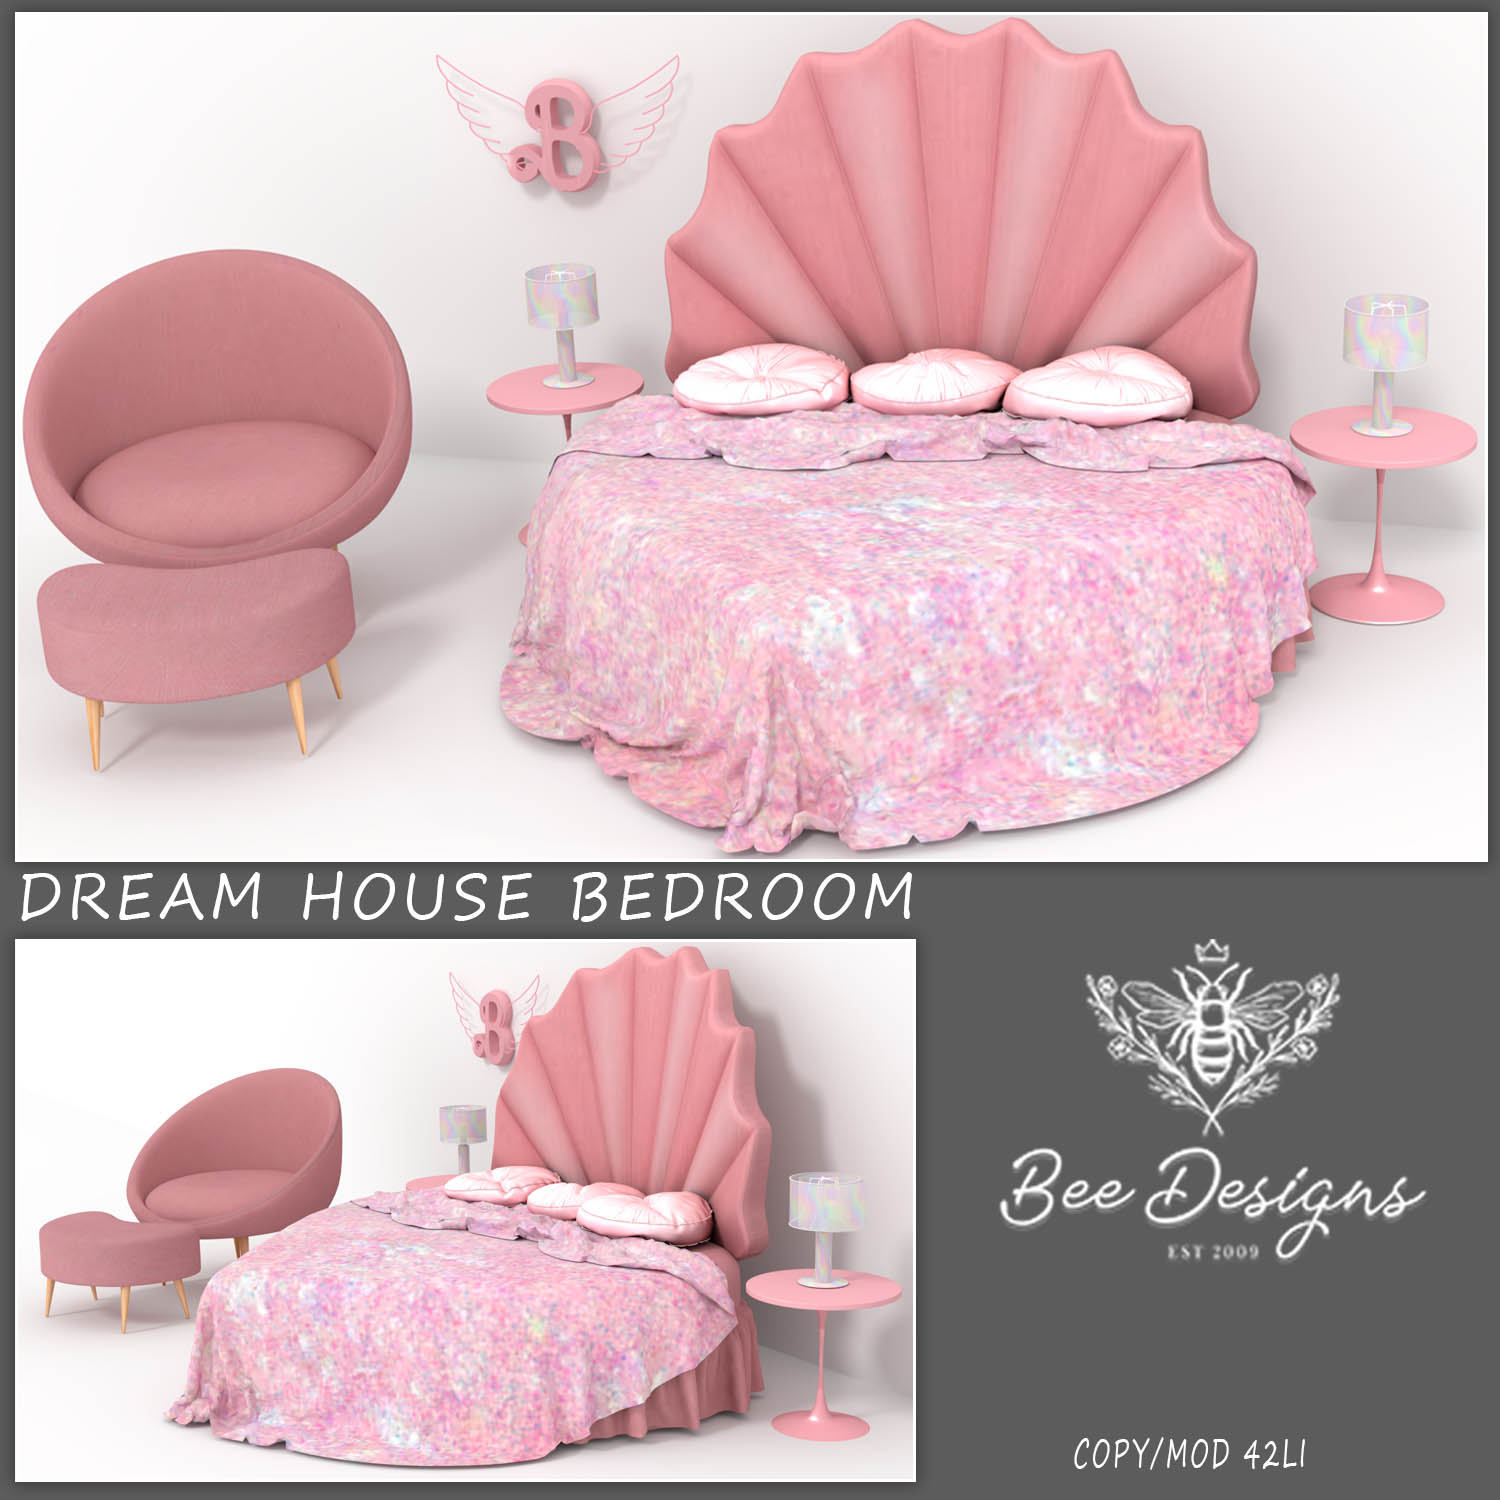 Bee Designs – Dream House Bedroom